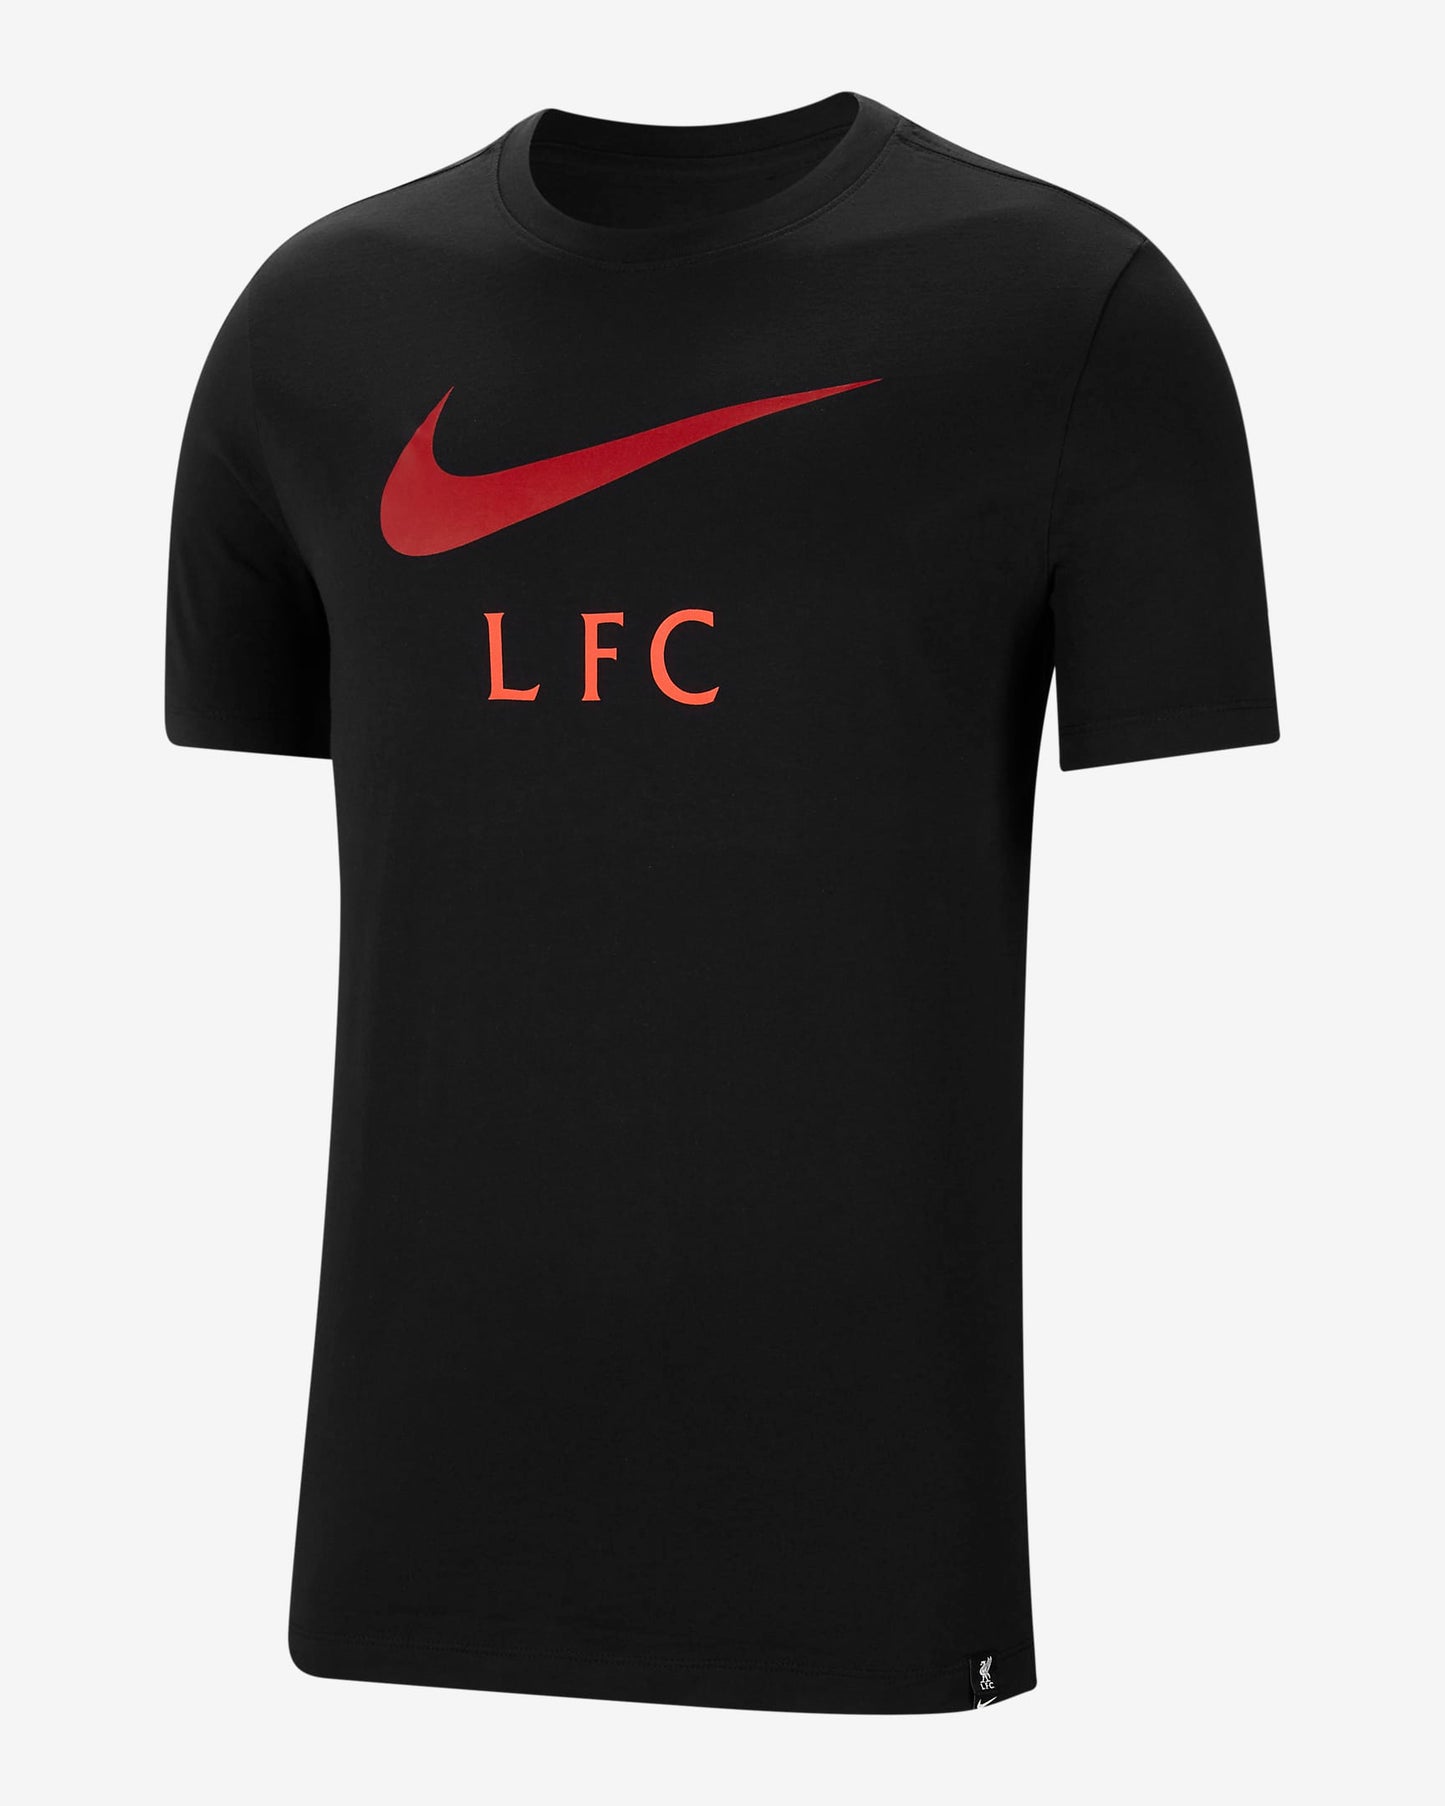 Men's Football T-Shirt Liverpool F.C.-Db4817-010